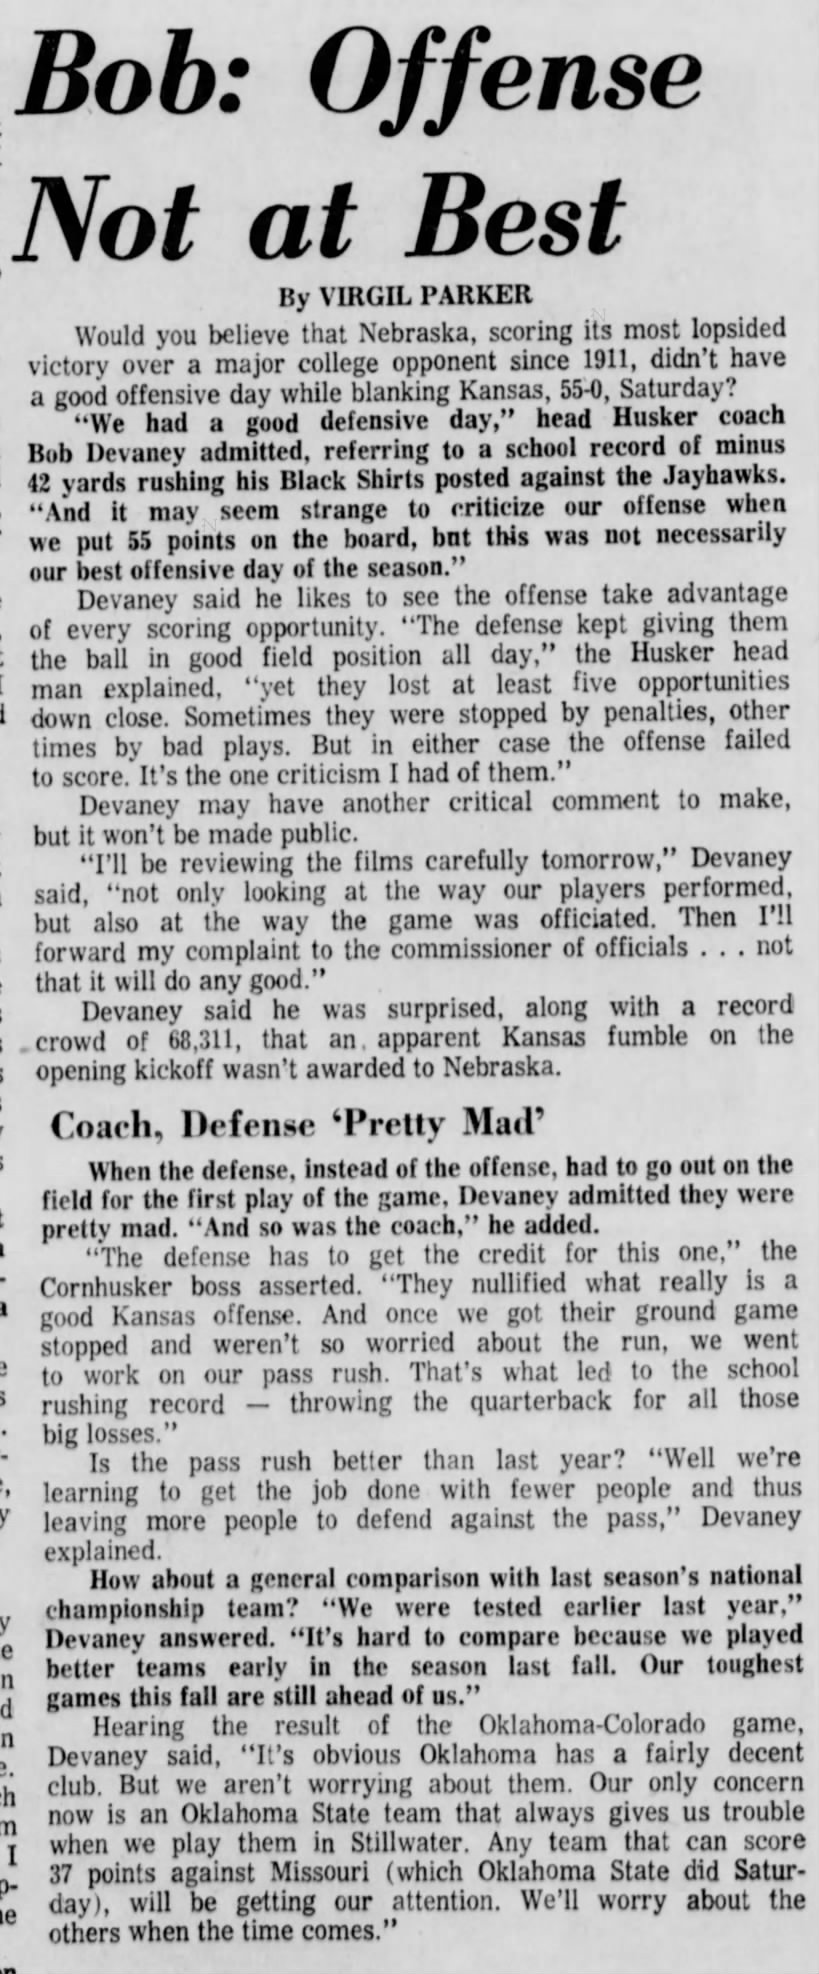 1971 Nebraska-Kansas offense